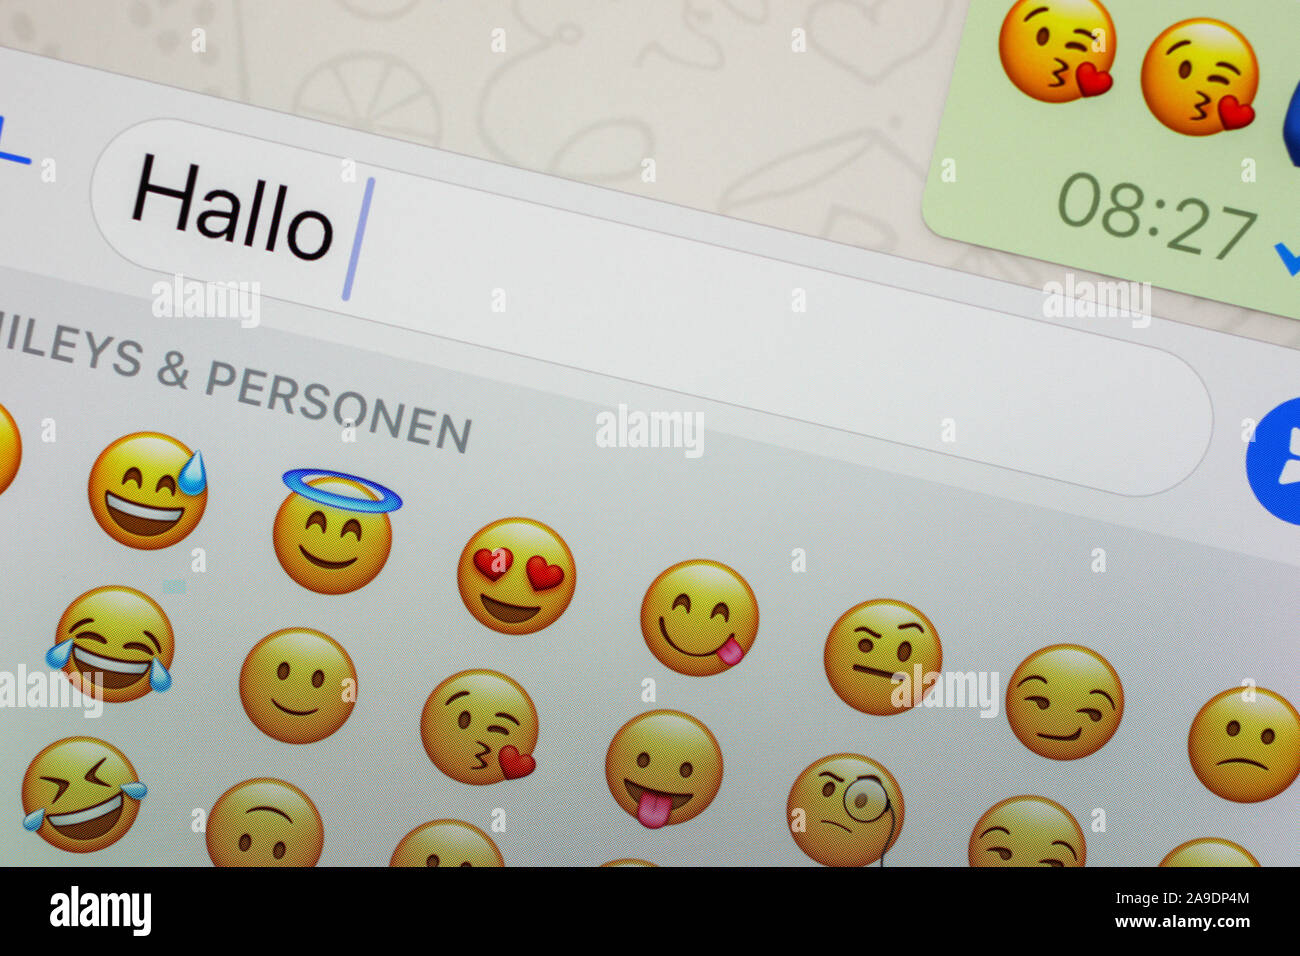 Apple iPhone, Detail, WhatsApp, Text ifield, Meldung "Hallo", Smiley, emoji  Stockfotografie - Alamy